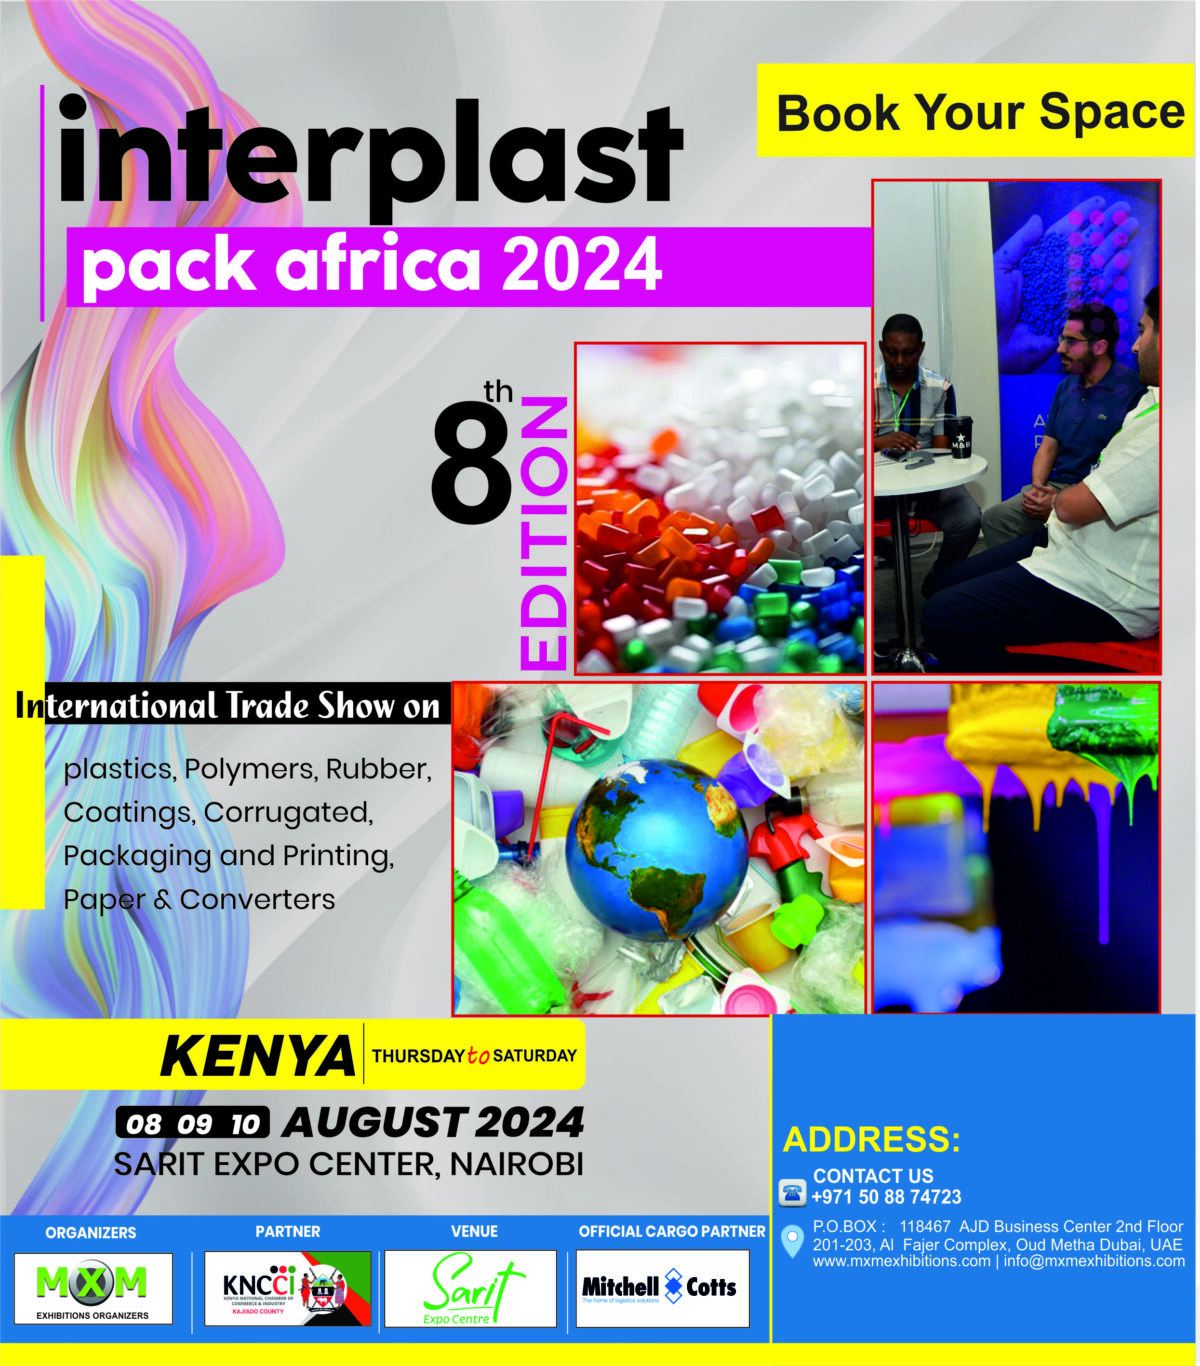 INTERPLAST-kenya-ad-2024-1200x1366.jpg